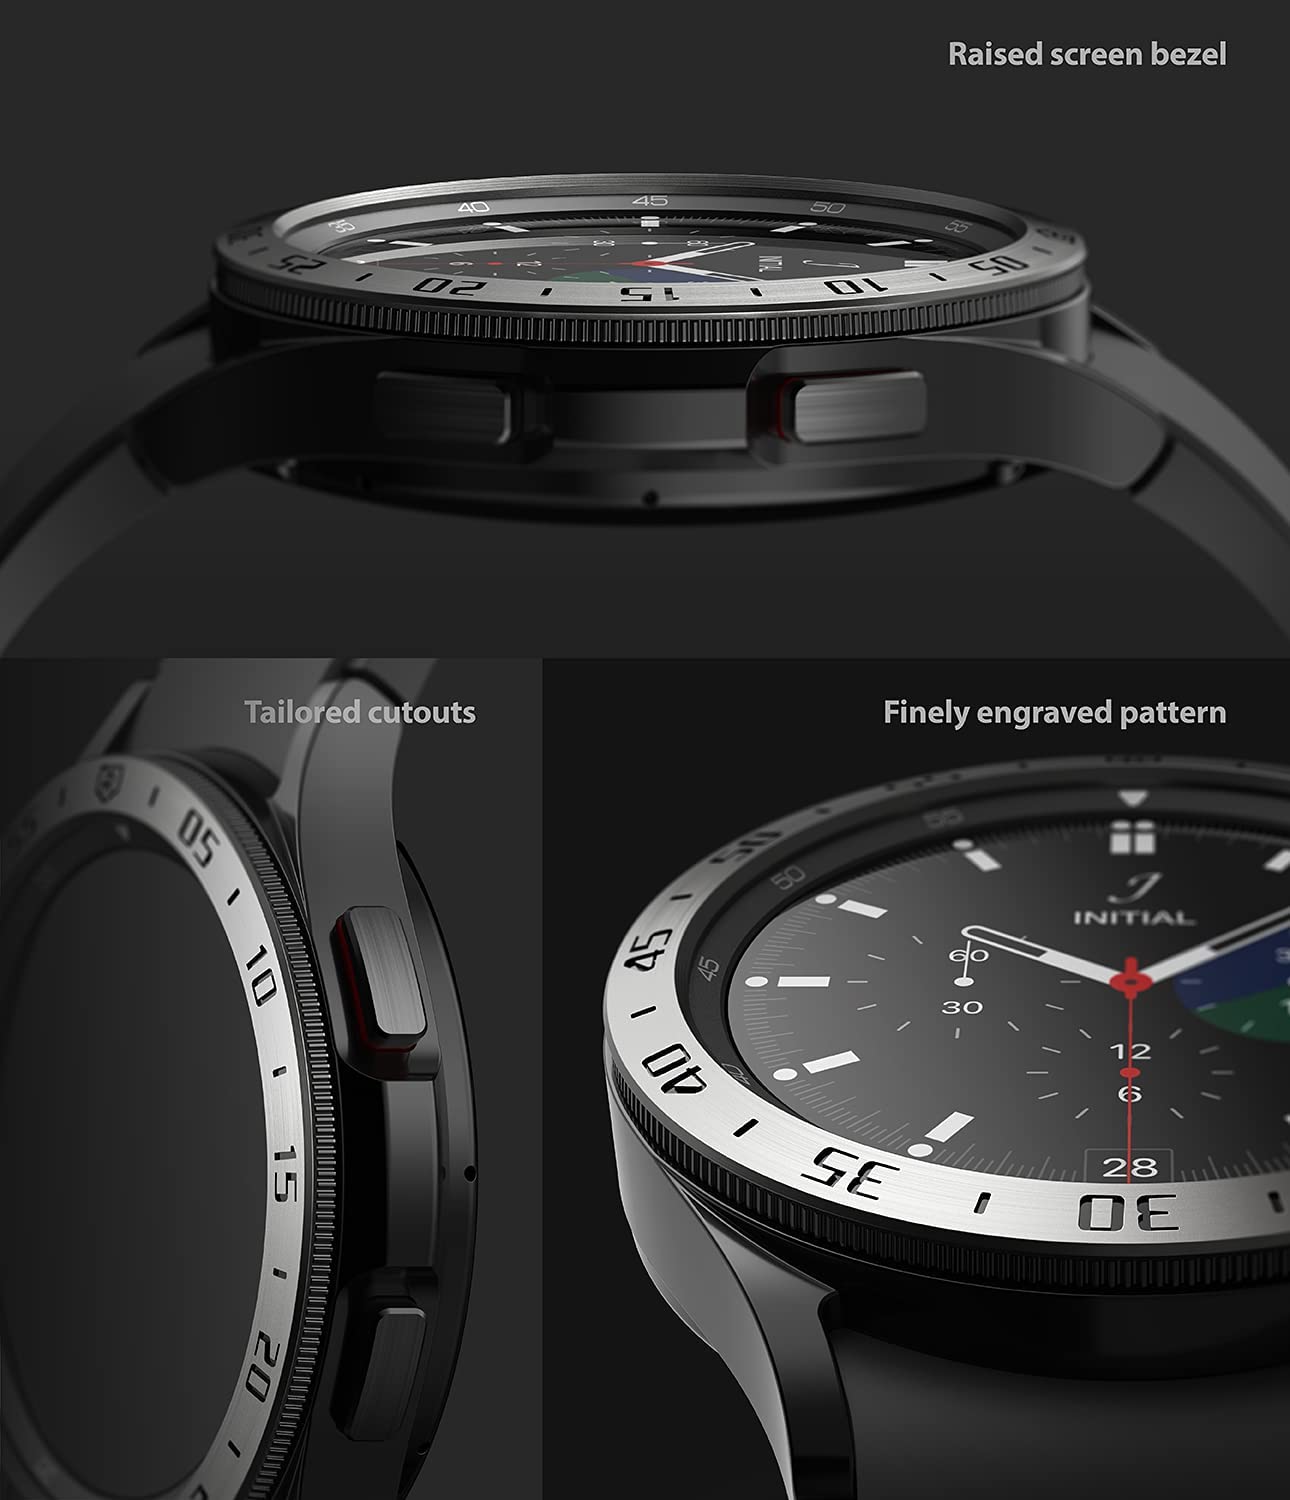 Bezel Styling Samsung Galaxy Watch 4 Classic 46mm D'argento